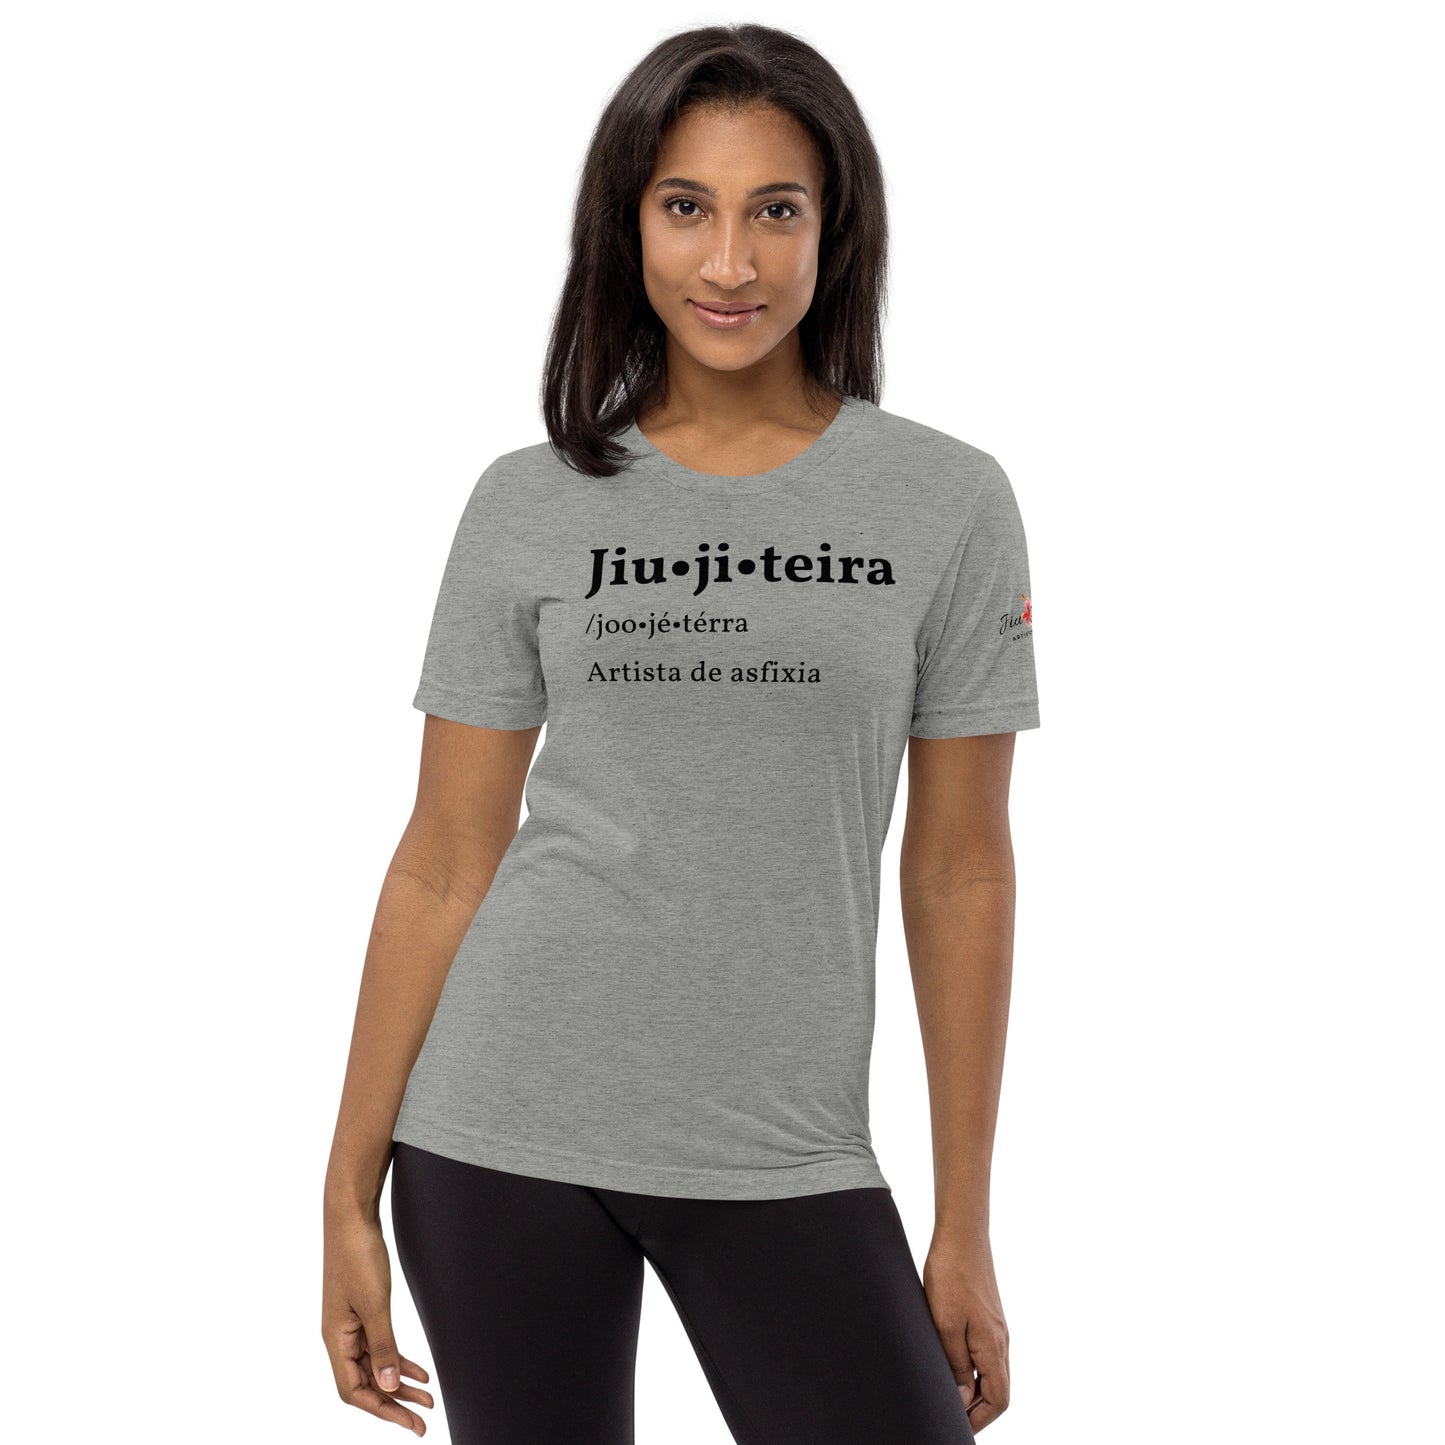 Short sleeve t-shirt vintage fitted - Jiujiteira Definition